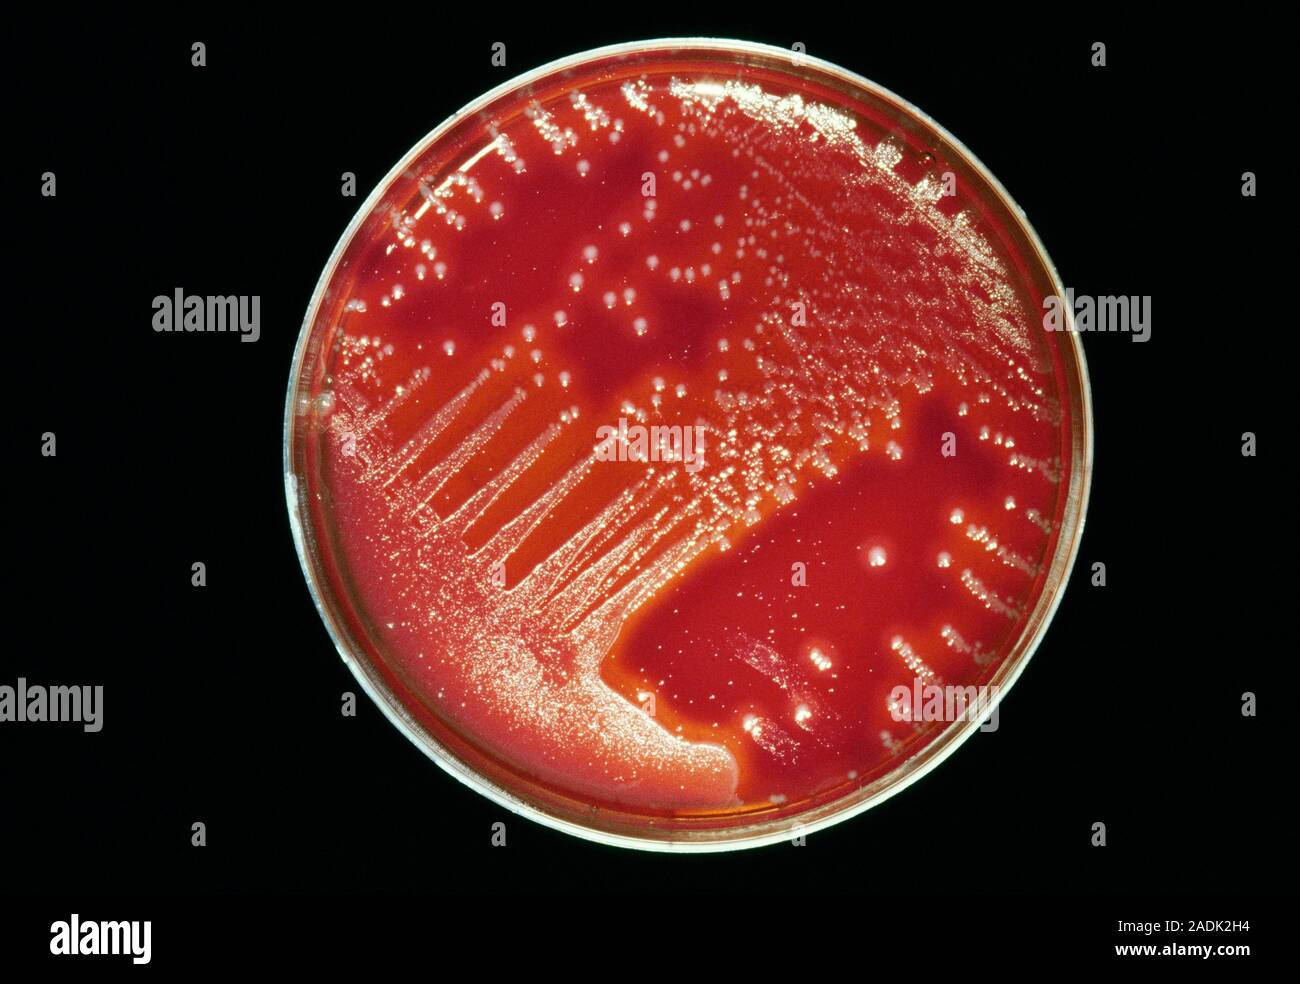 Streptococcus Bacteria Colonies Of Streptococcus Pyogenes A Gram